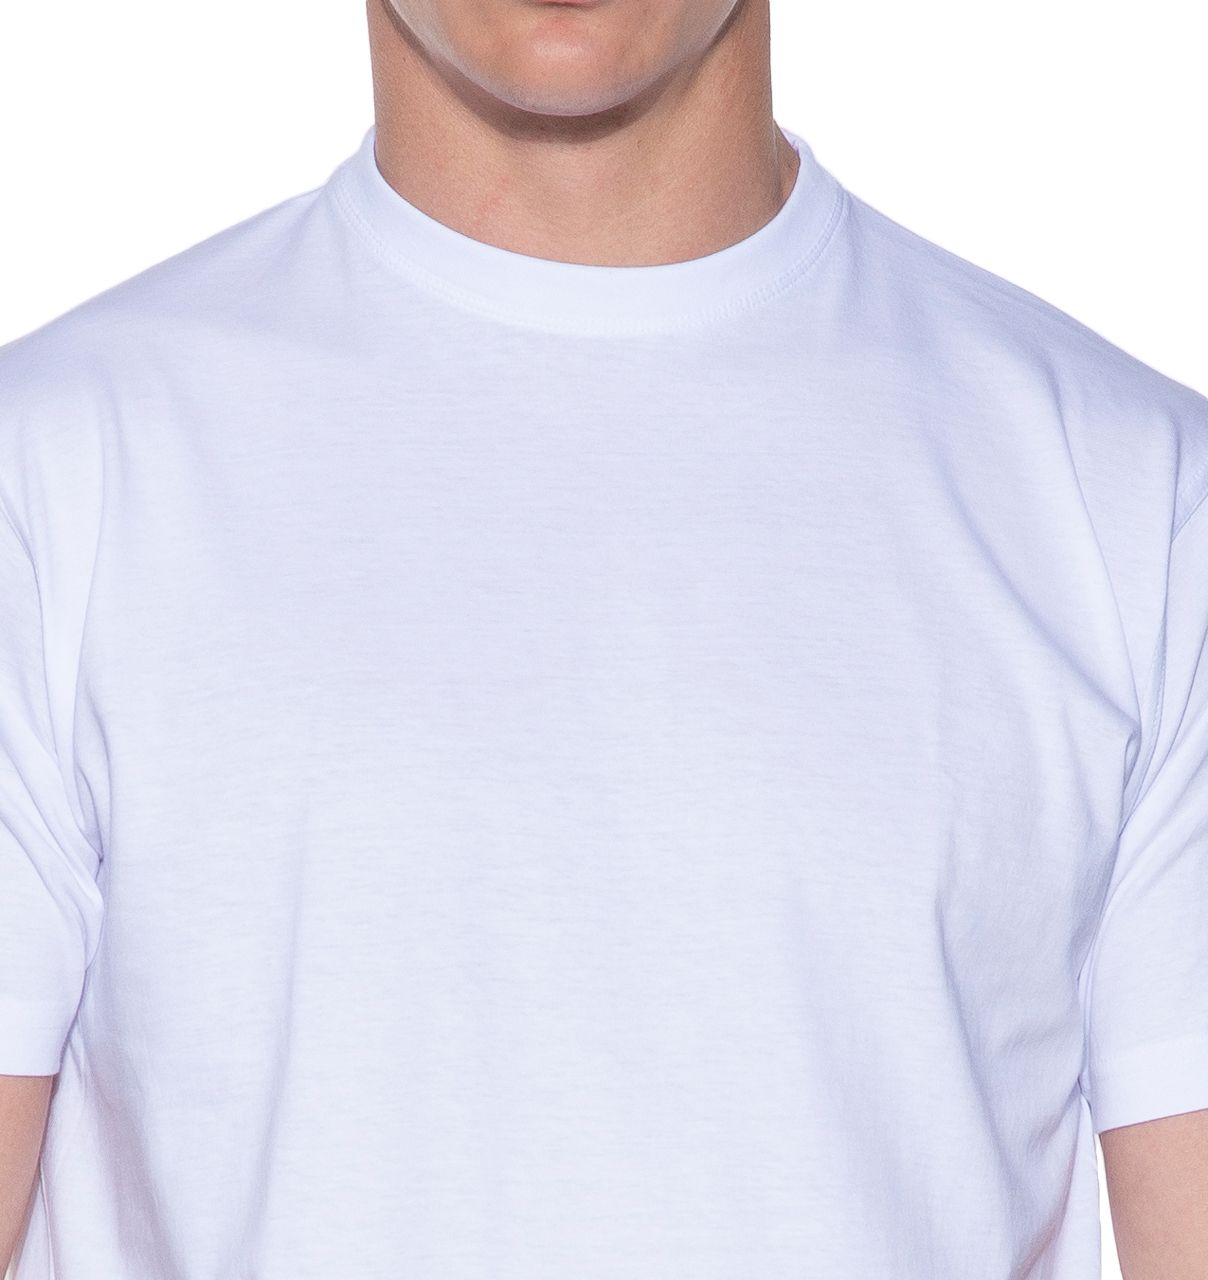 Wauw Rubber Uitscheiden Slater Regular fit T-shirt Ronde hals 2-pack | Shop nu - Only for Men